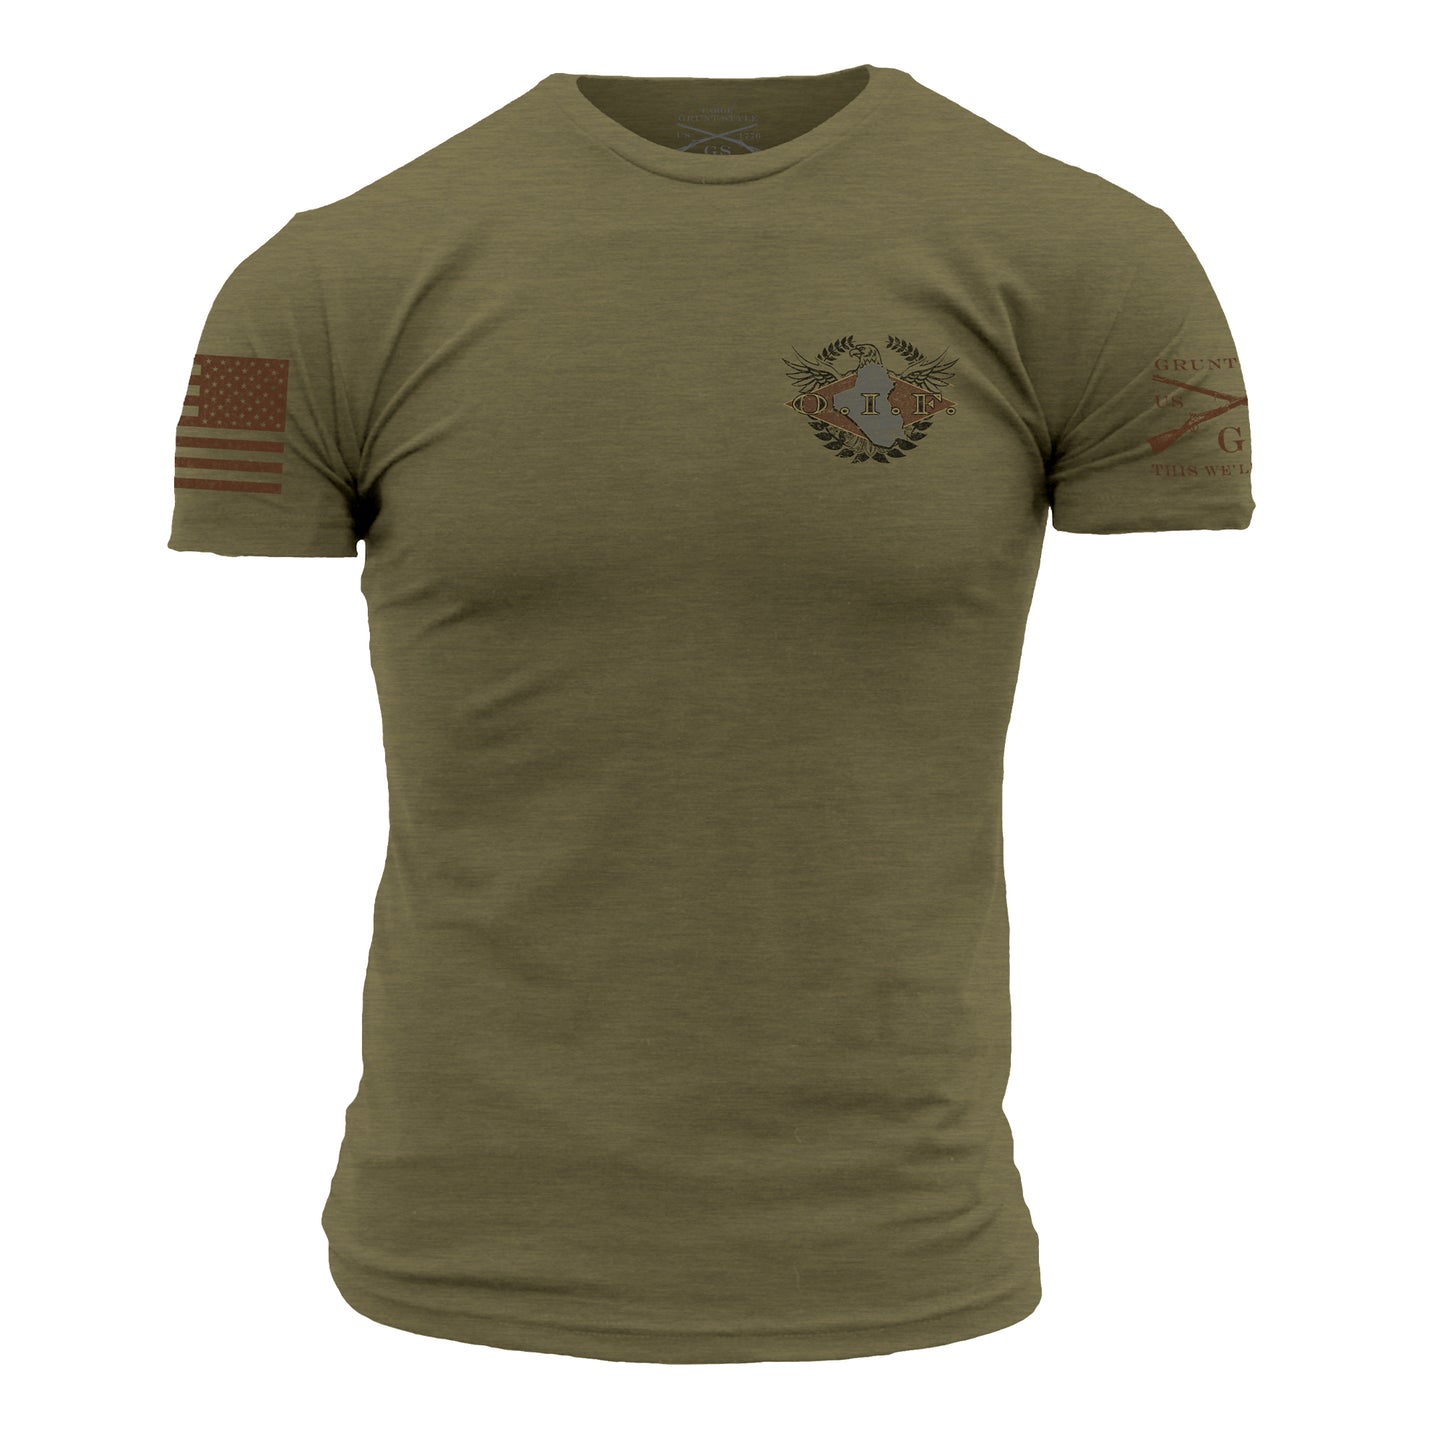 Men's O.I.F. Veteran Military Shirts 